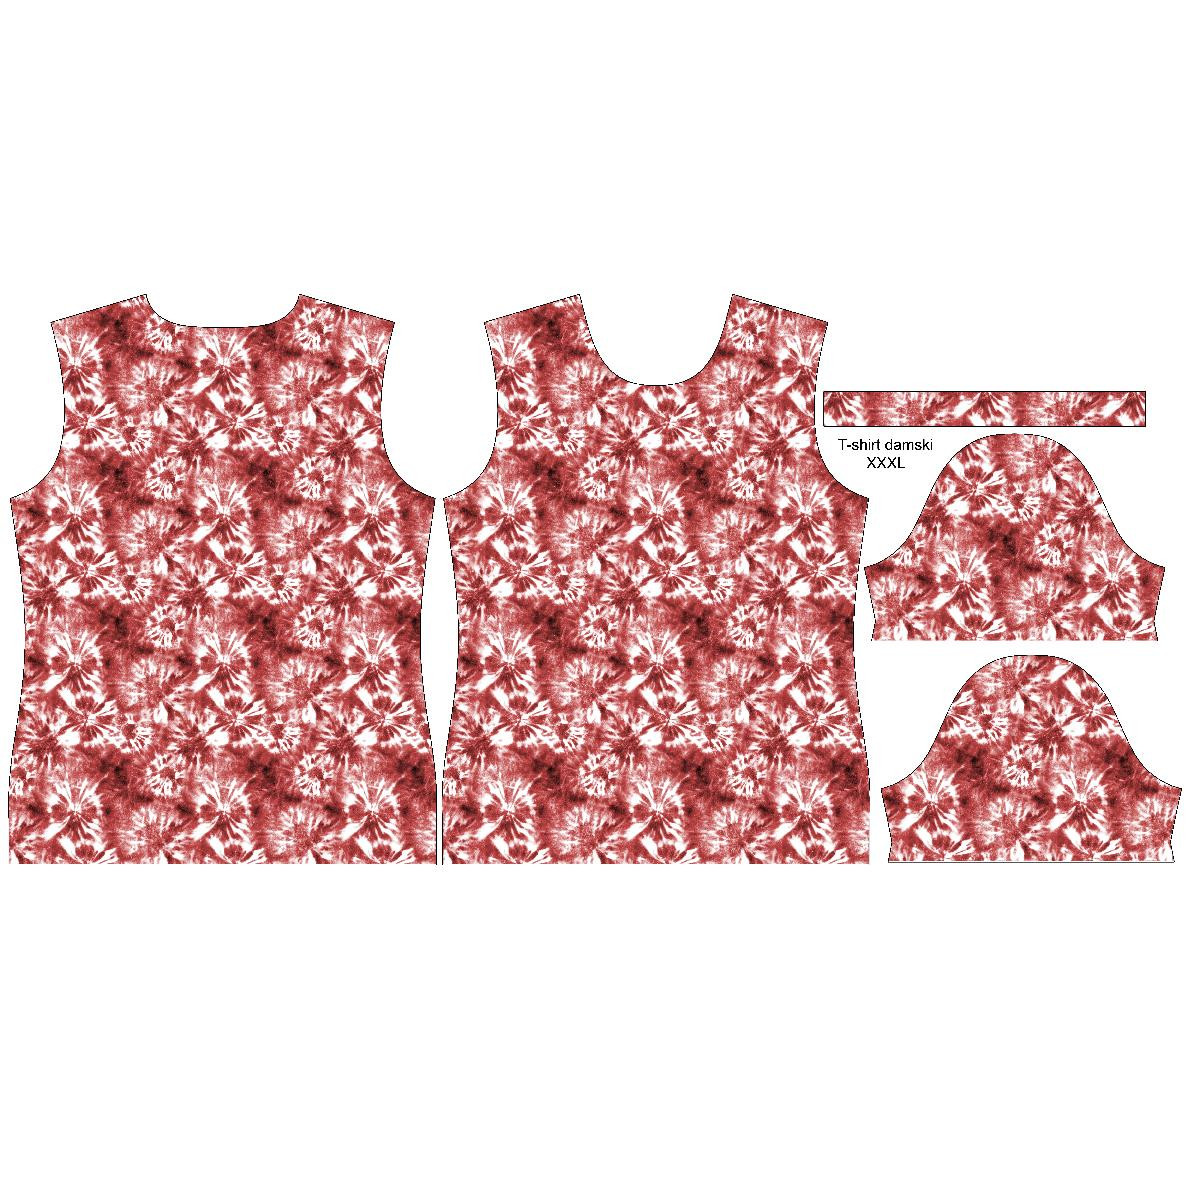 WOMEN’S T-SHIRT - BATIK pat. 1 / red - single jersey